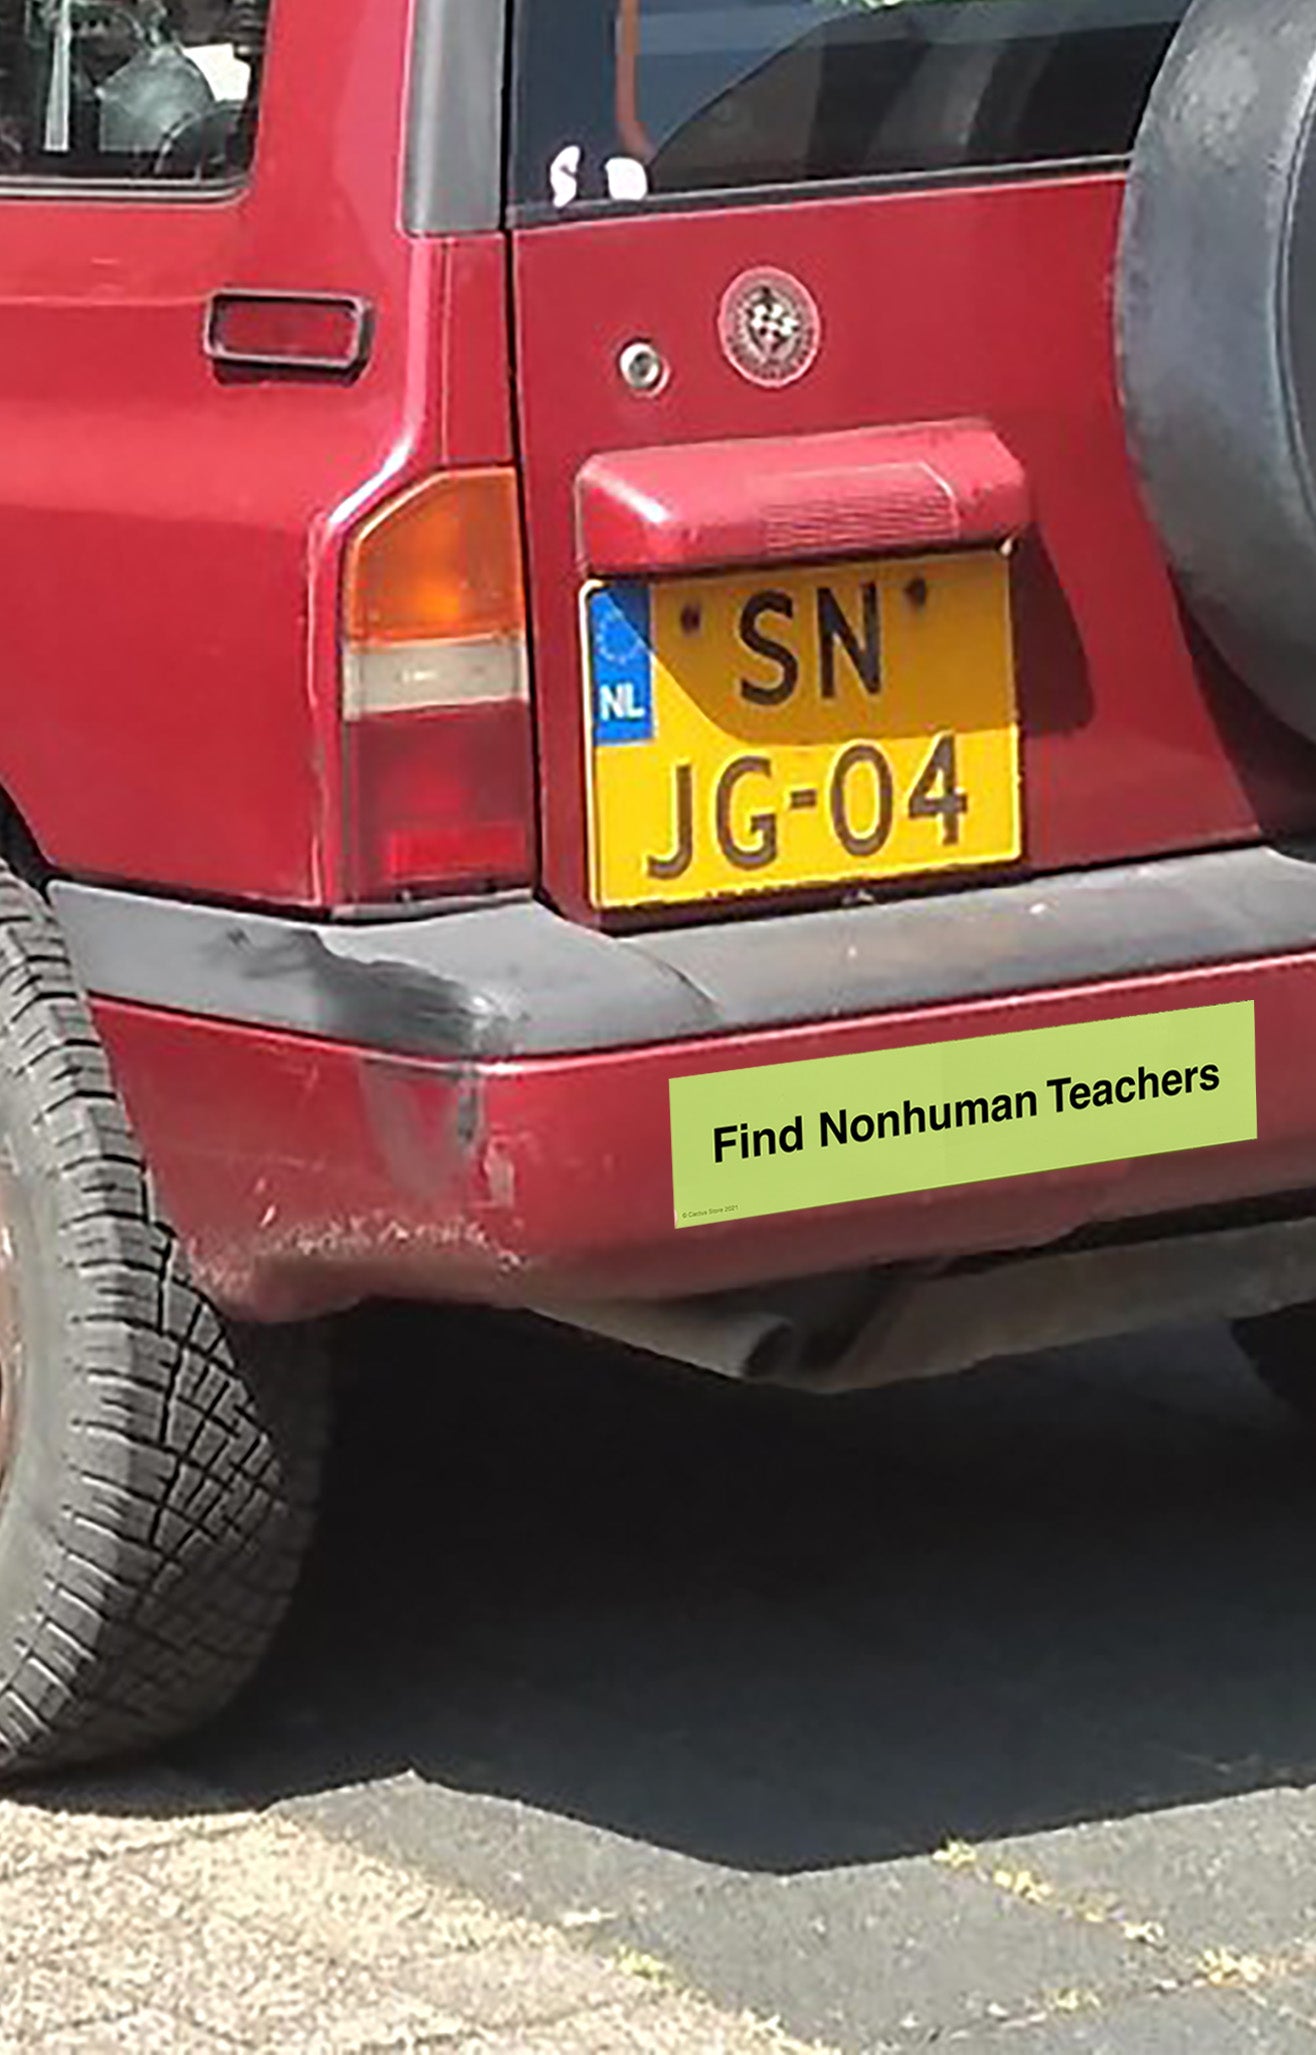 Find Nonhuman Teachers Bumper Sticker